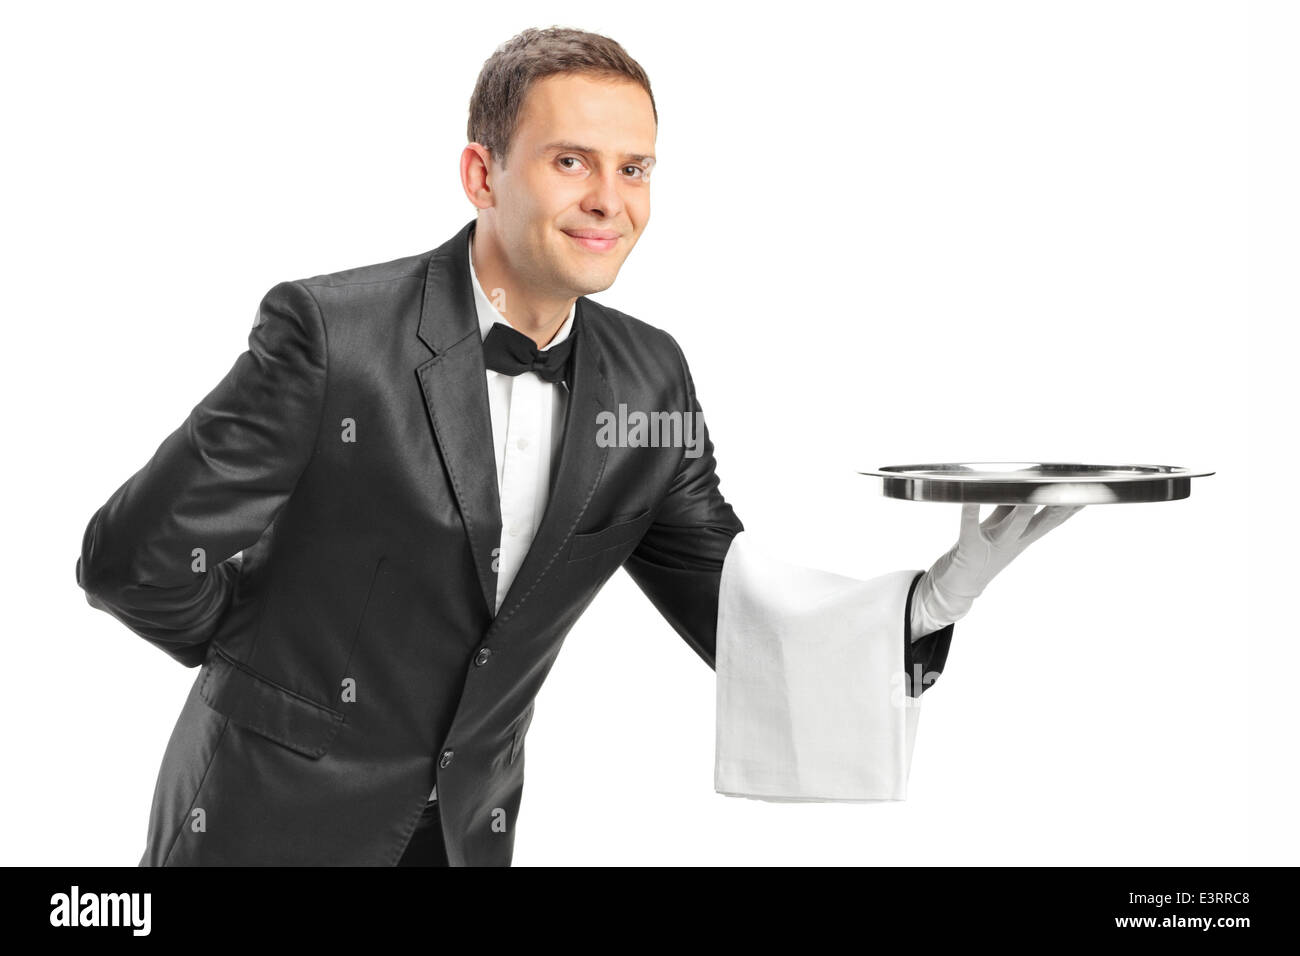 Professional waiter holding a tray Stock Photo